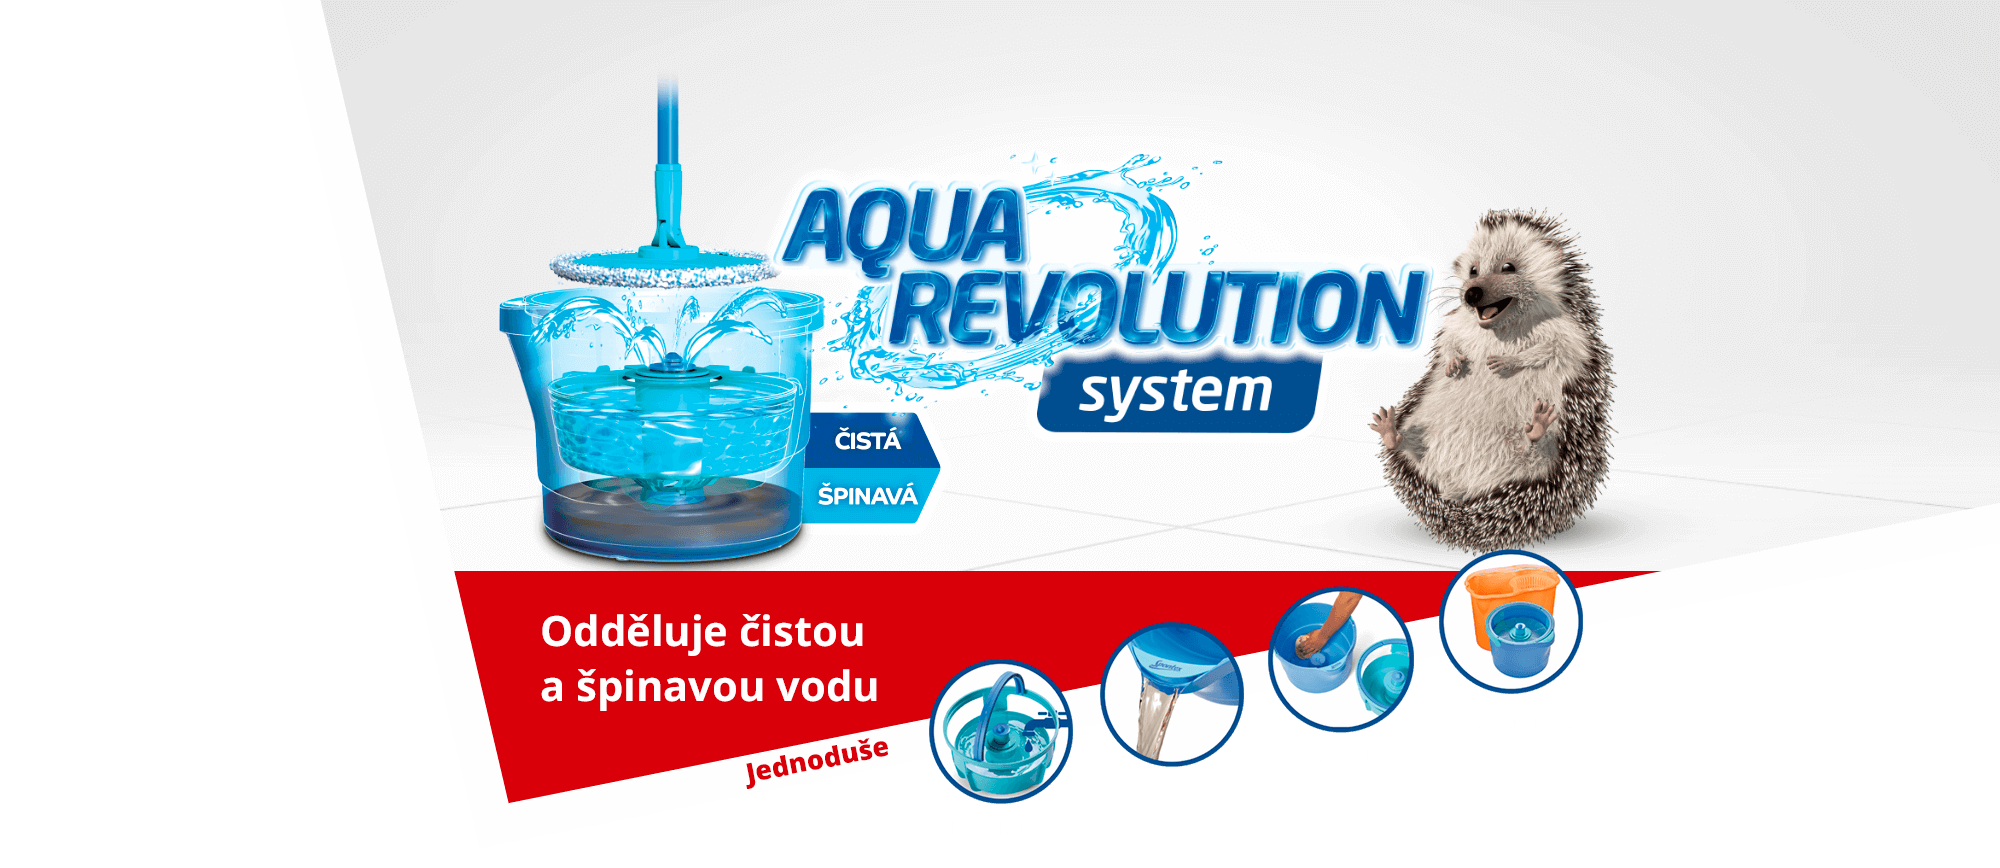 Aqua revolution system